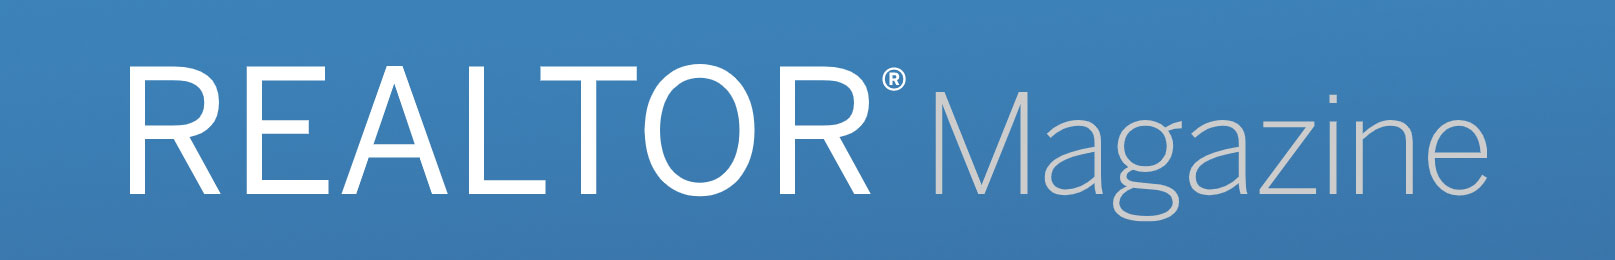 Realtor Magazine logo